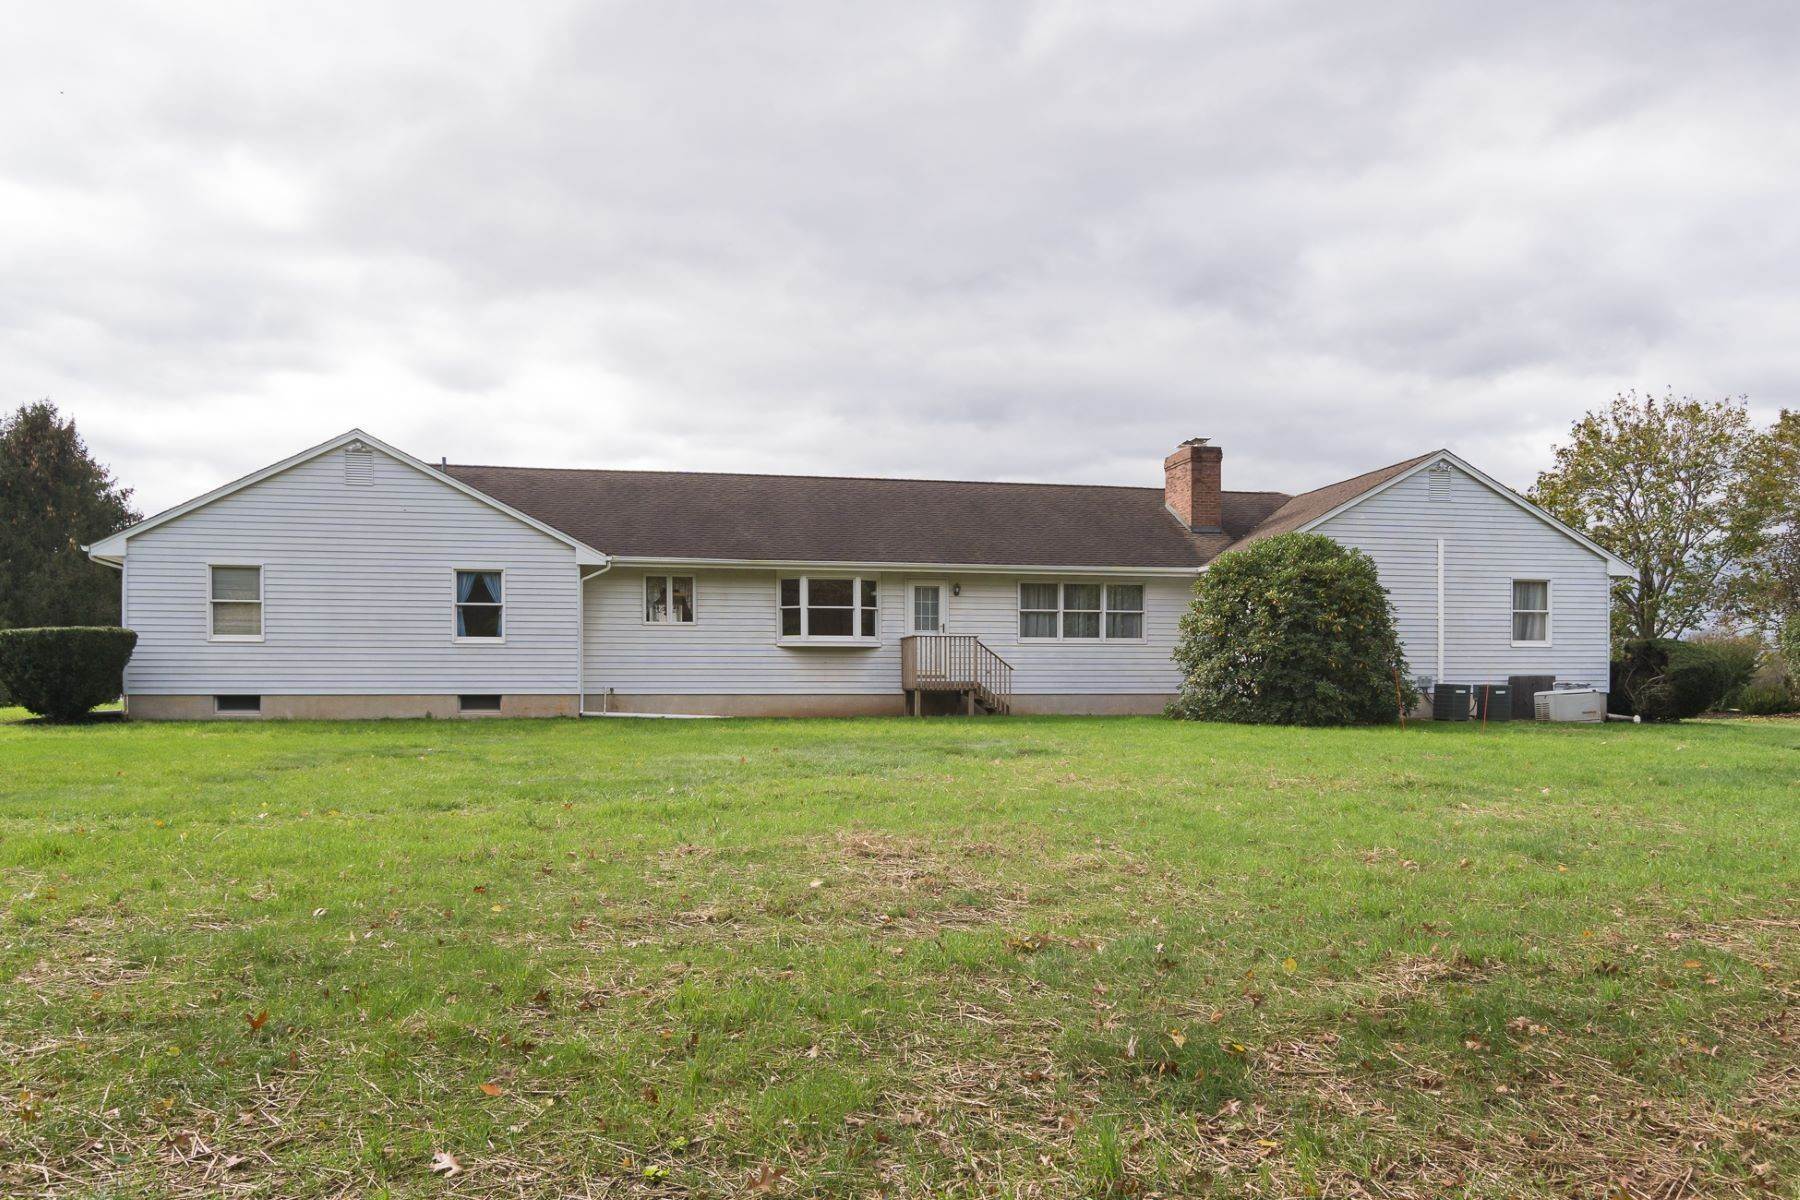 35. Single Family Homes für Verkauf beim Large Easy-Living Ranch Overlooks Preserved Fields 47 Petty Road, Cranbury, New Jersey 08512 Vereinigte Staaten